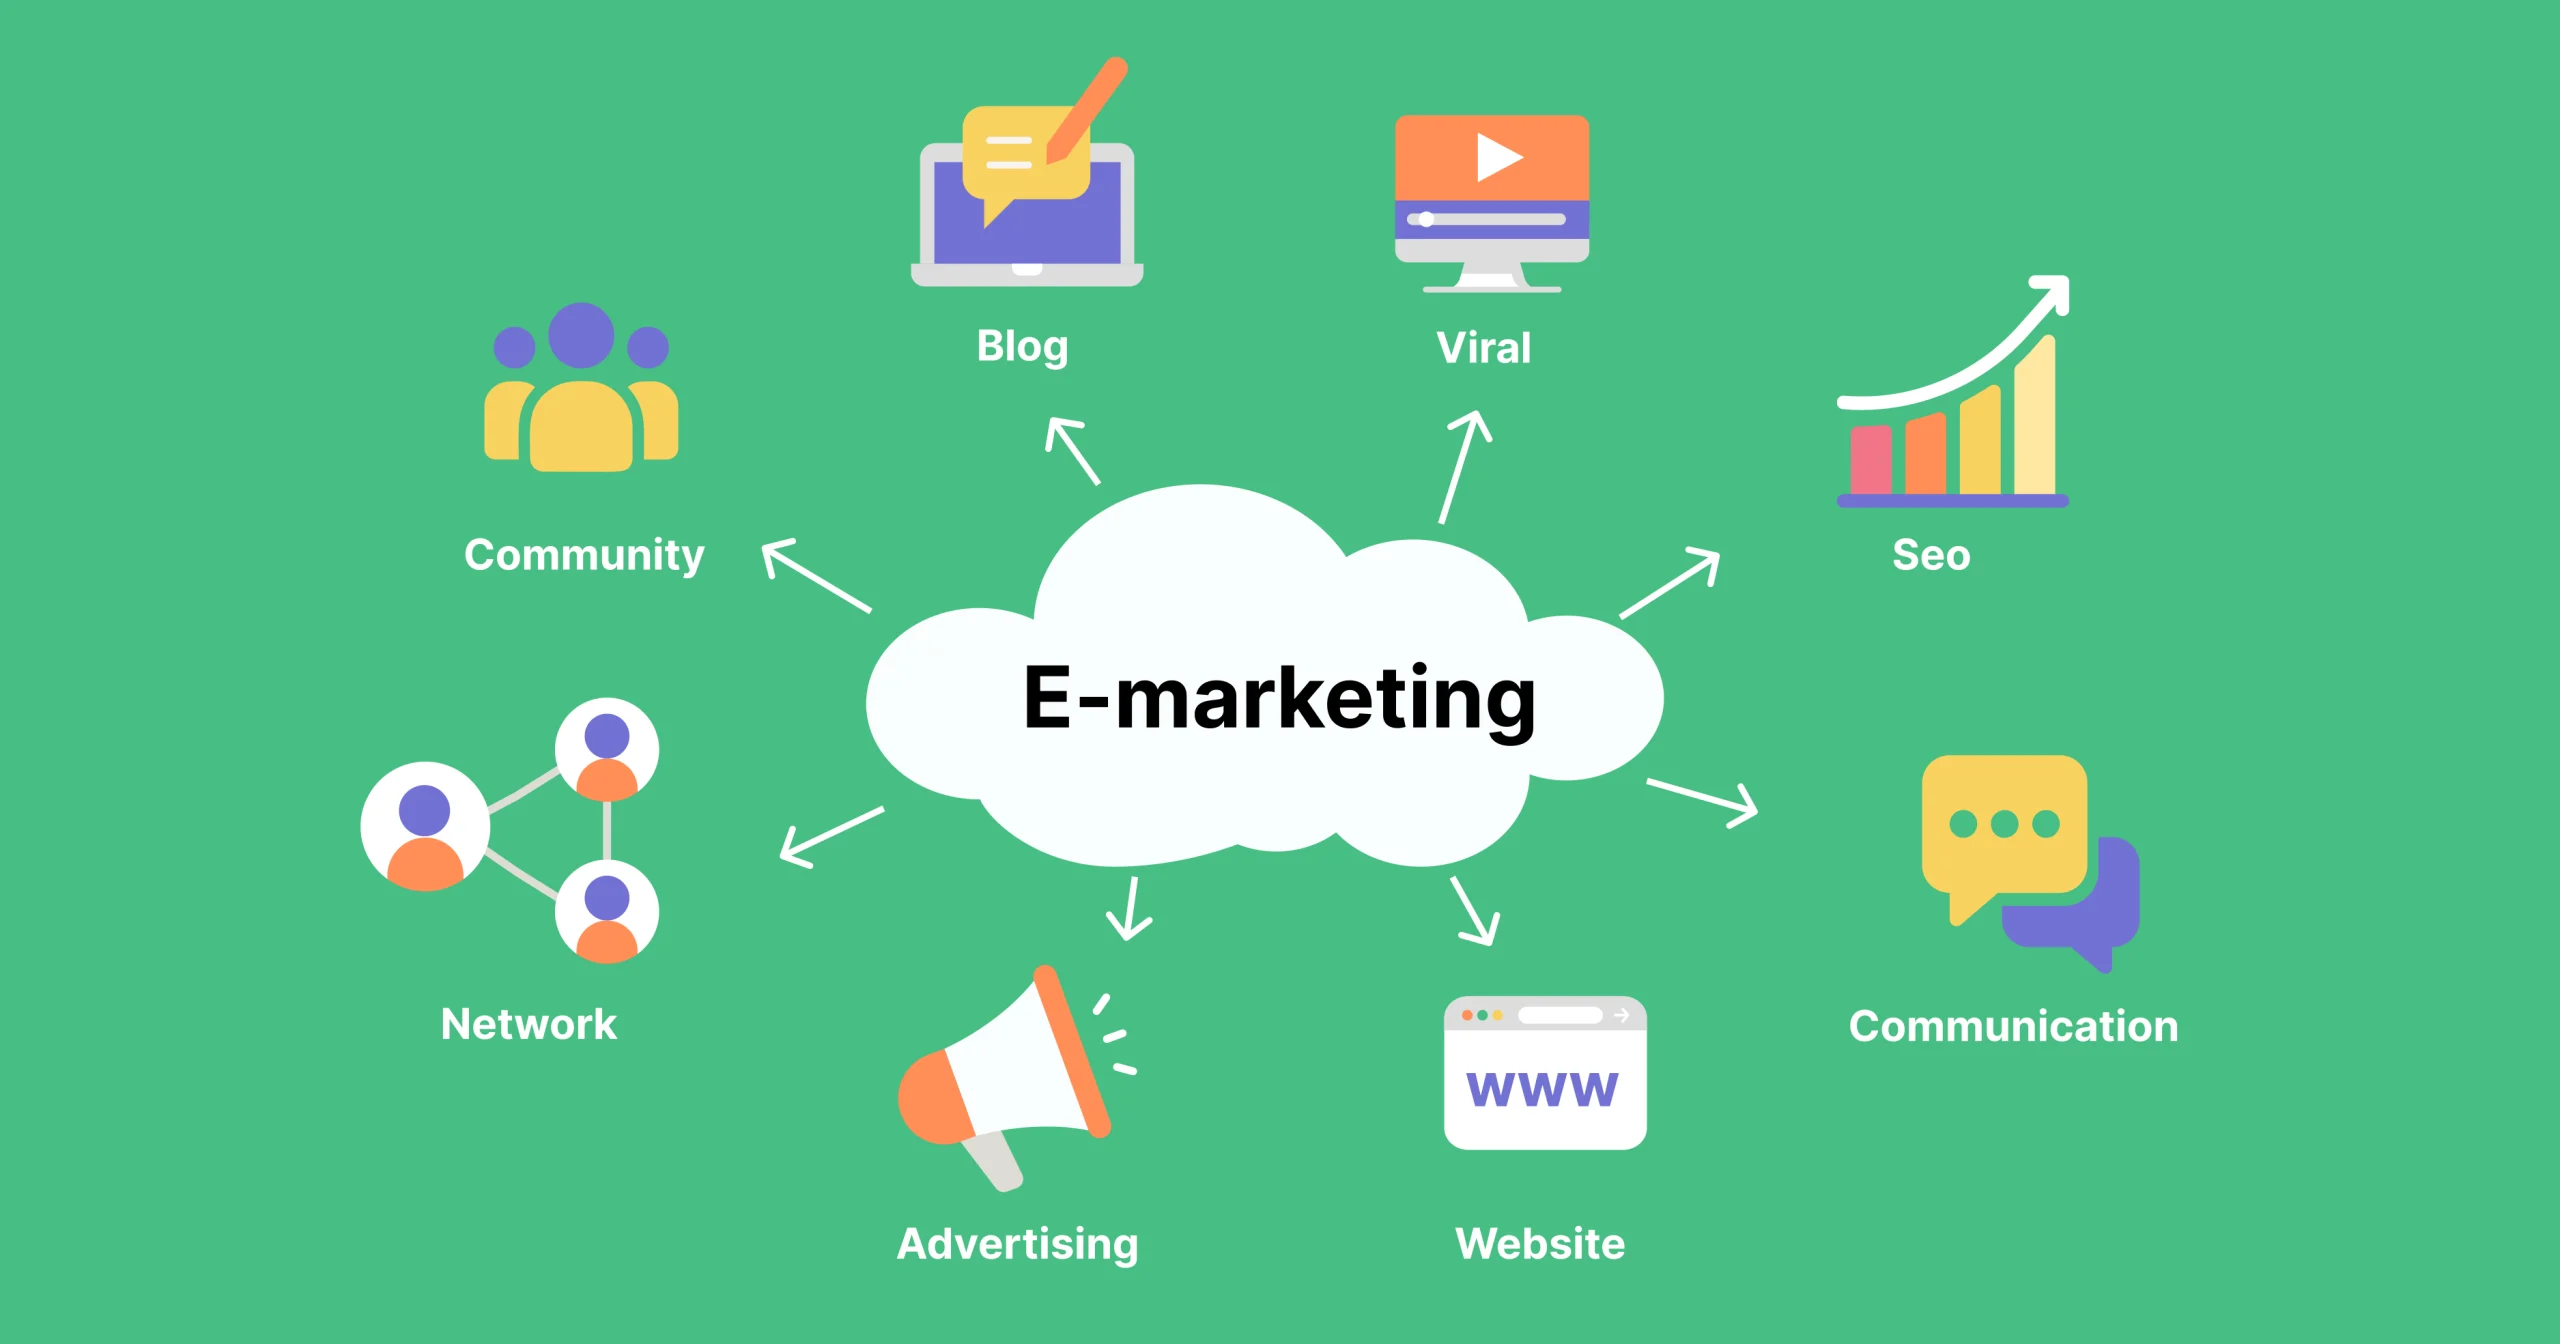 E-marketing symbols referring to: search engine optimization, social media, blog, advertising, etc.